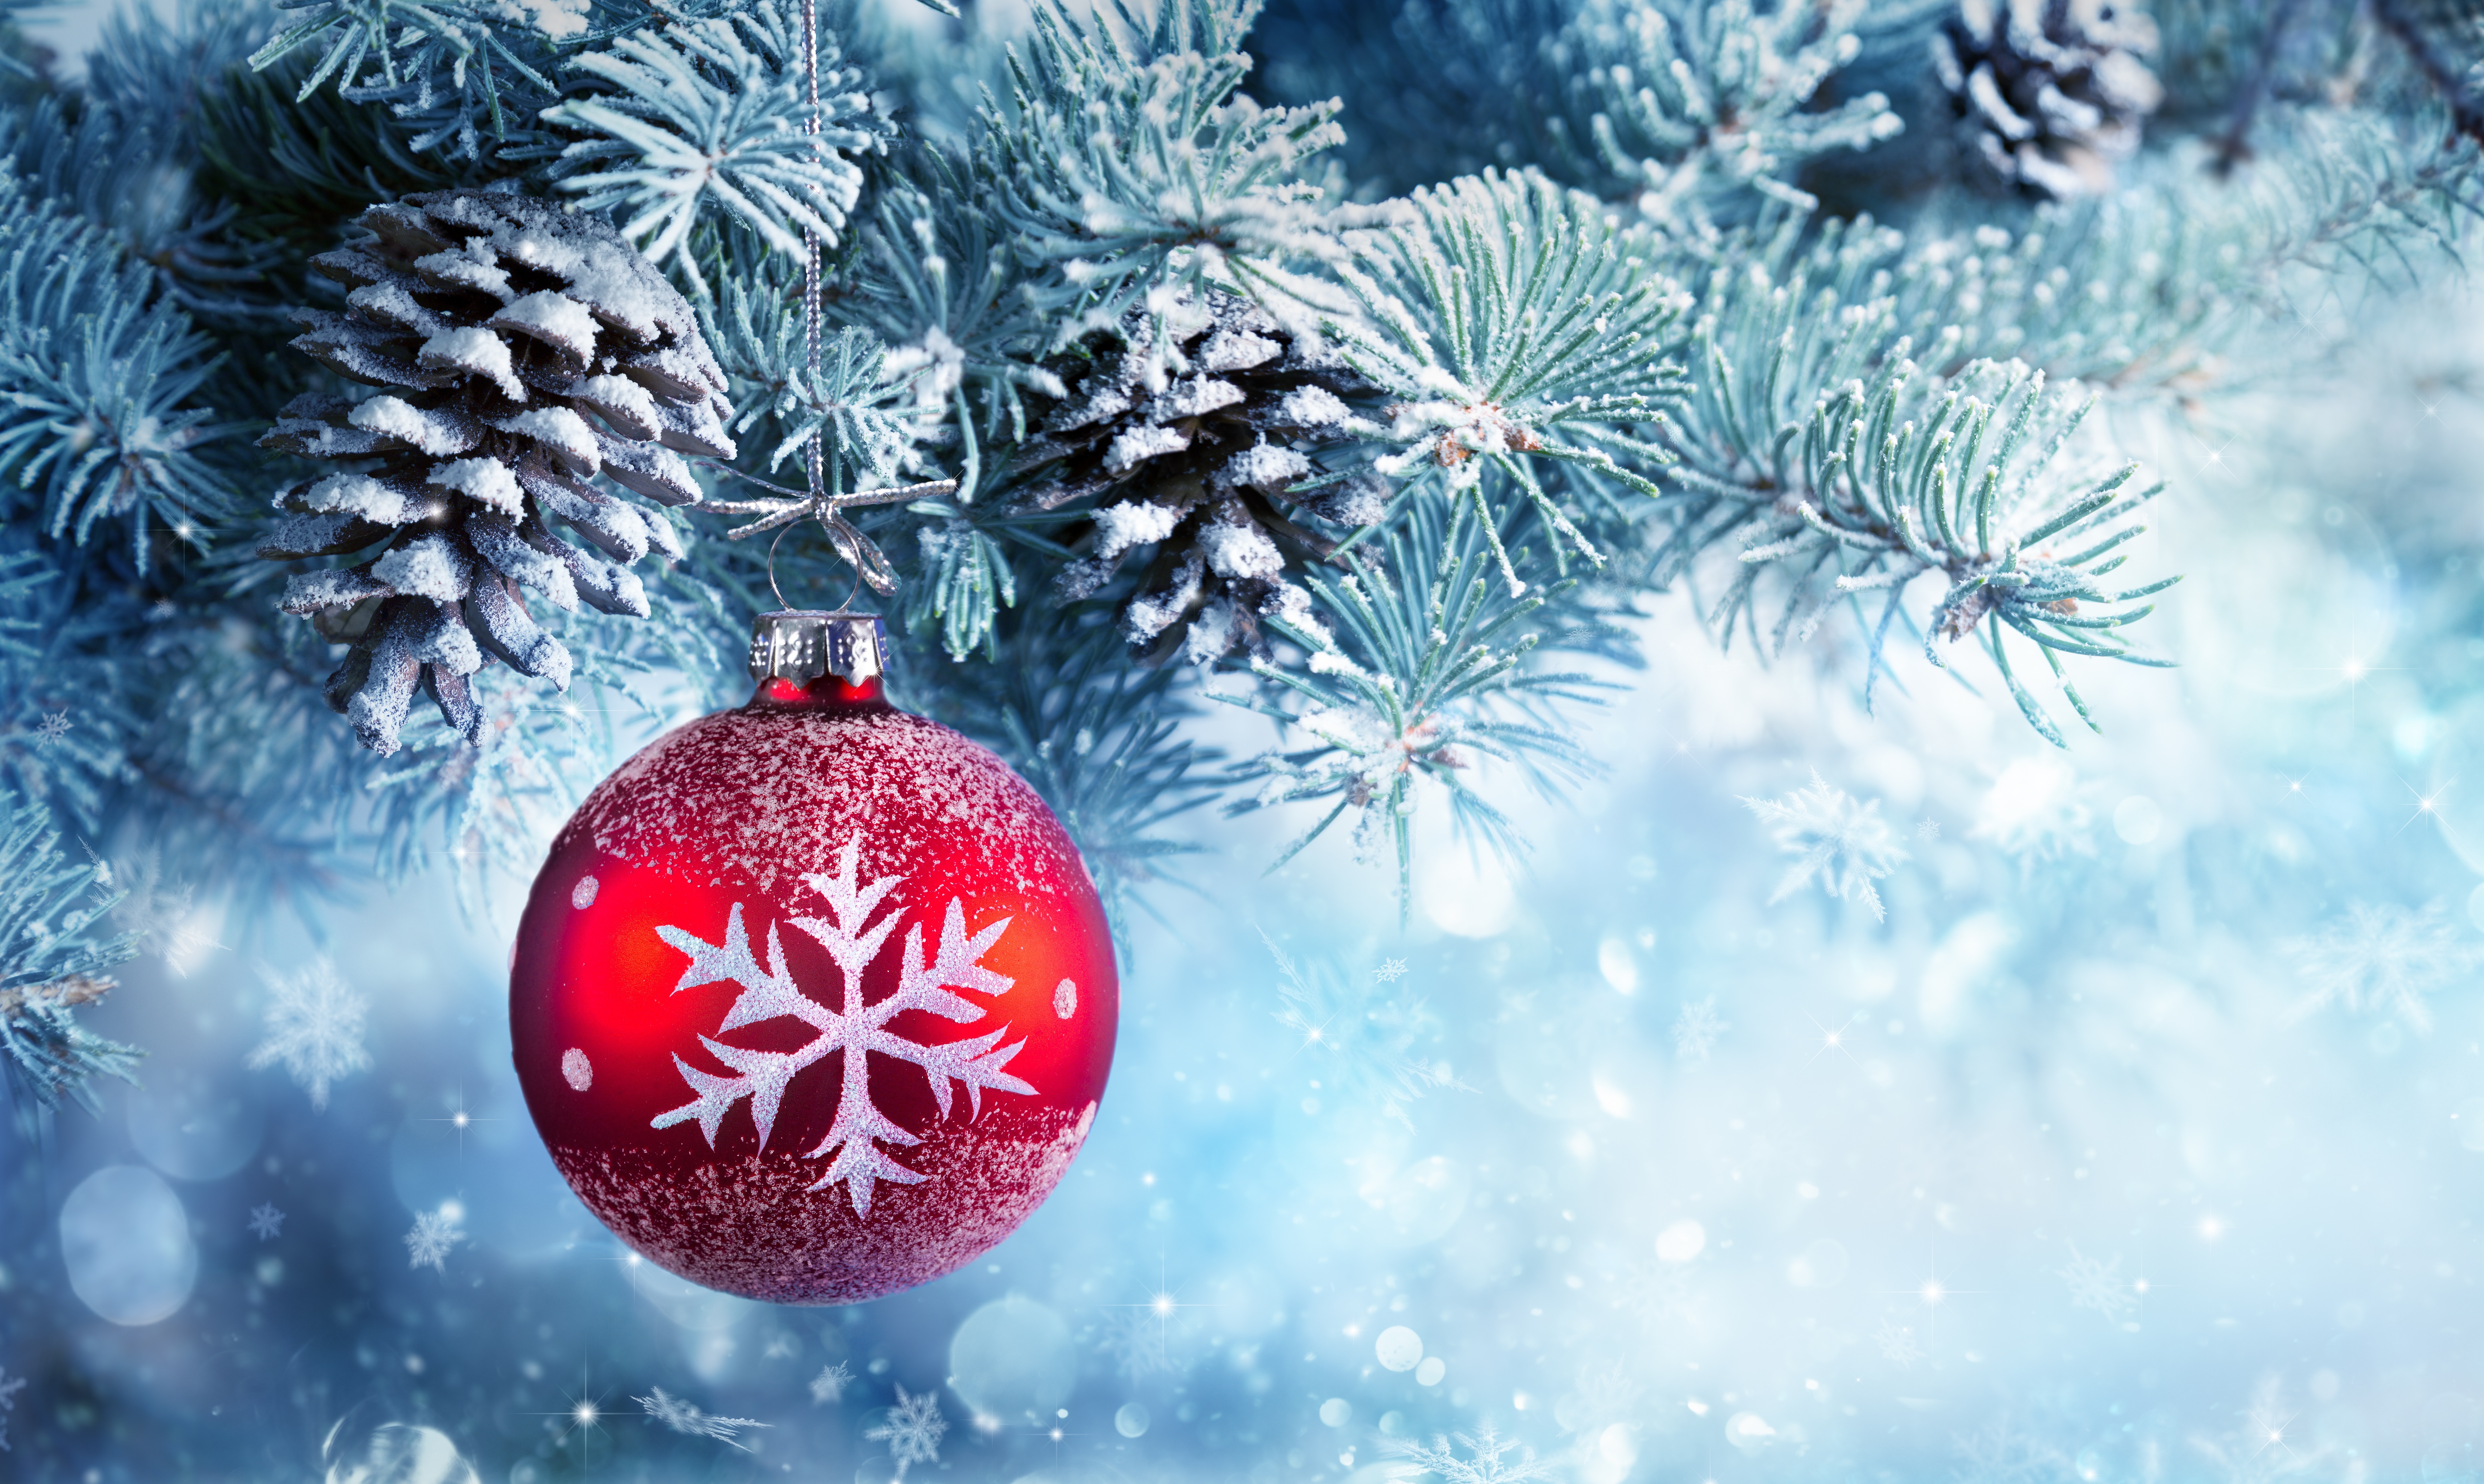 #Snow, K, #Christmas ornament, #Frost, #Christmas ball, #Winter, #Pine trees HD Wallpaper